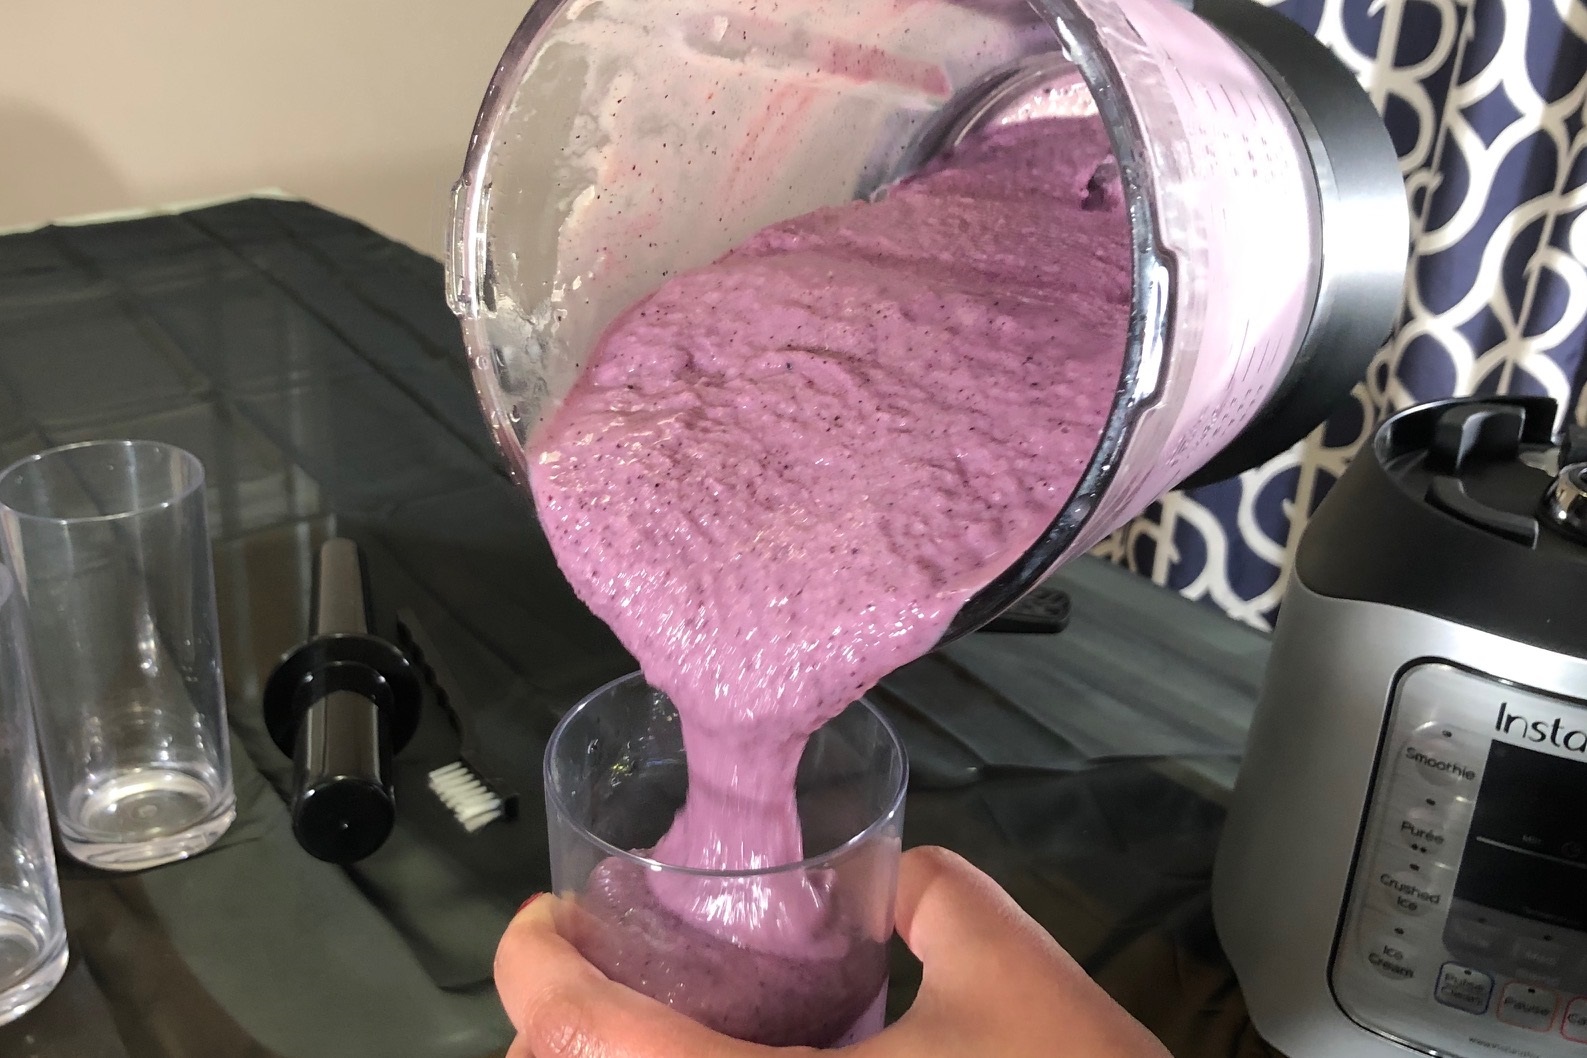 The $99 Instant Pot Ace Blender Blends Frozen Ingredients and